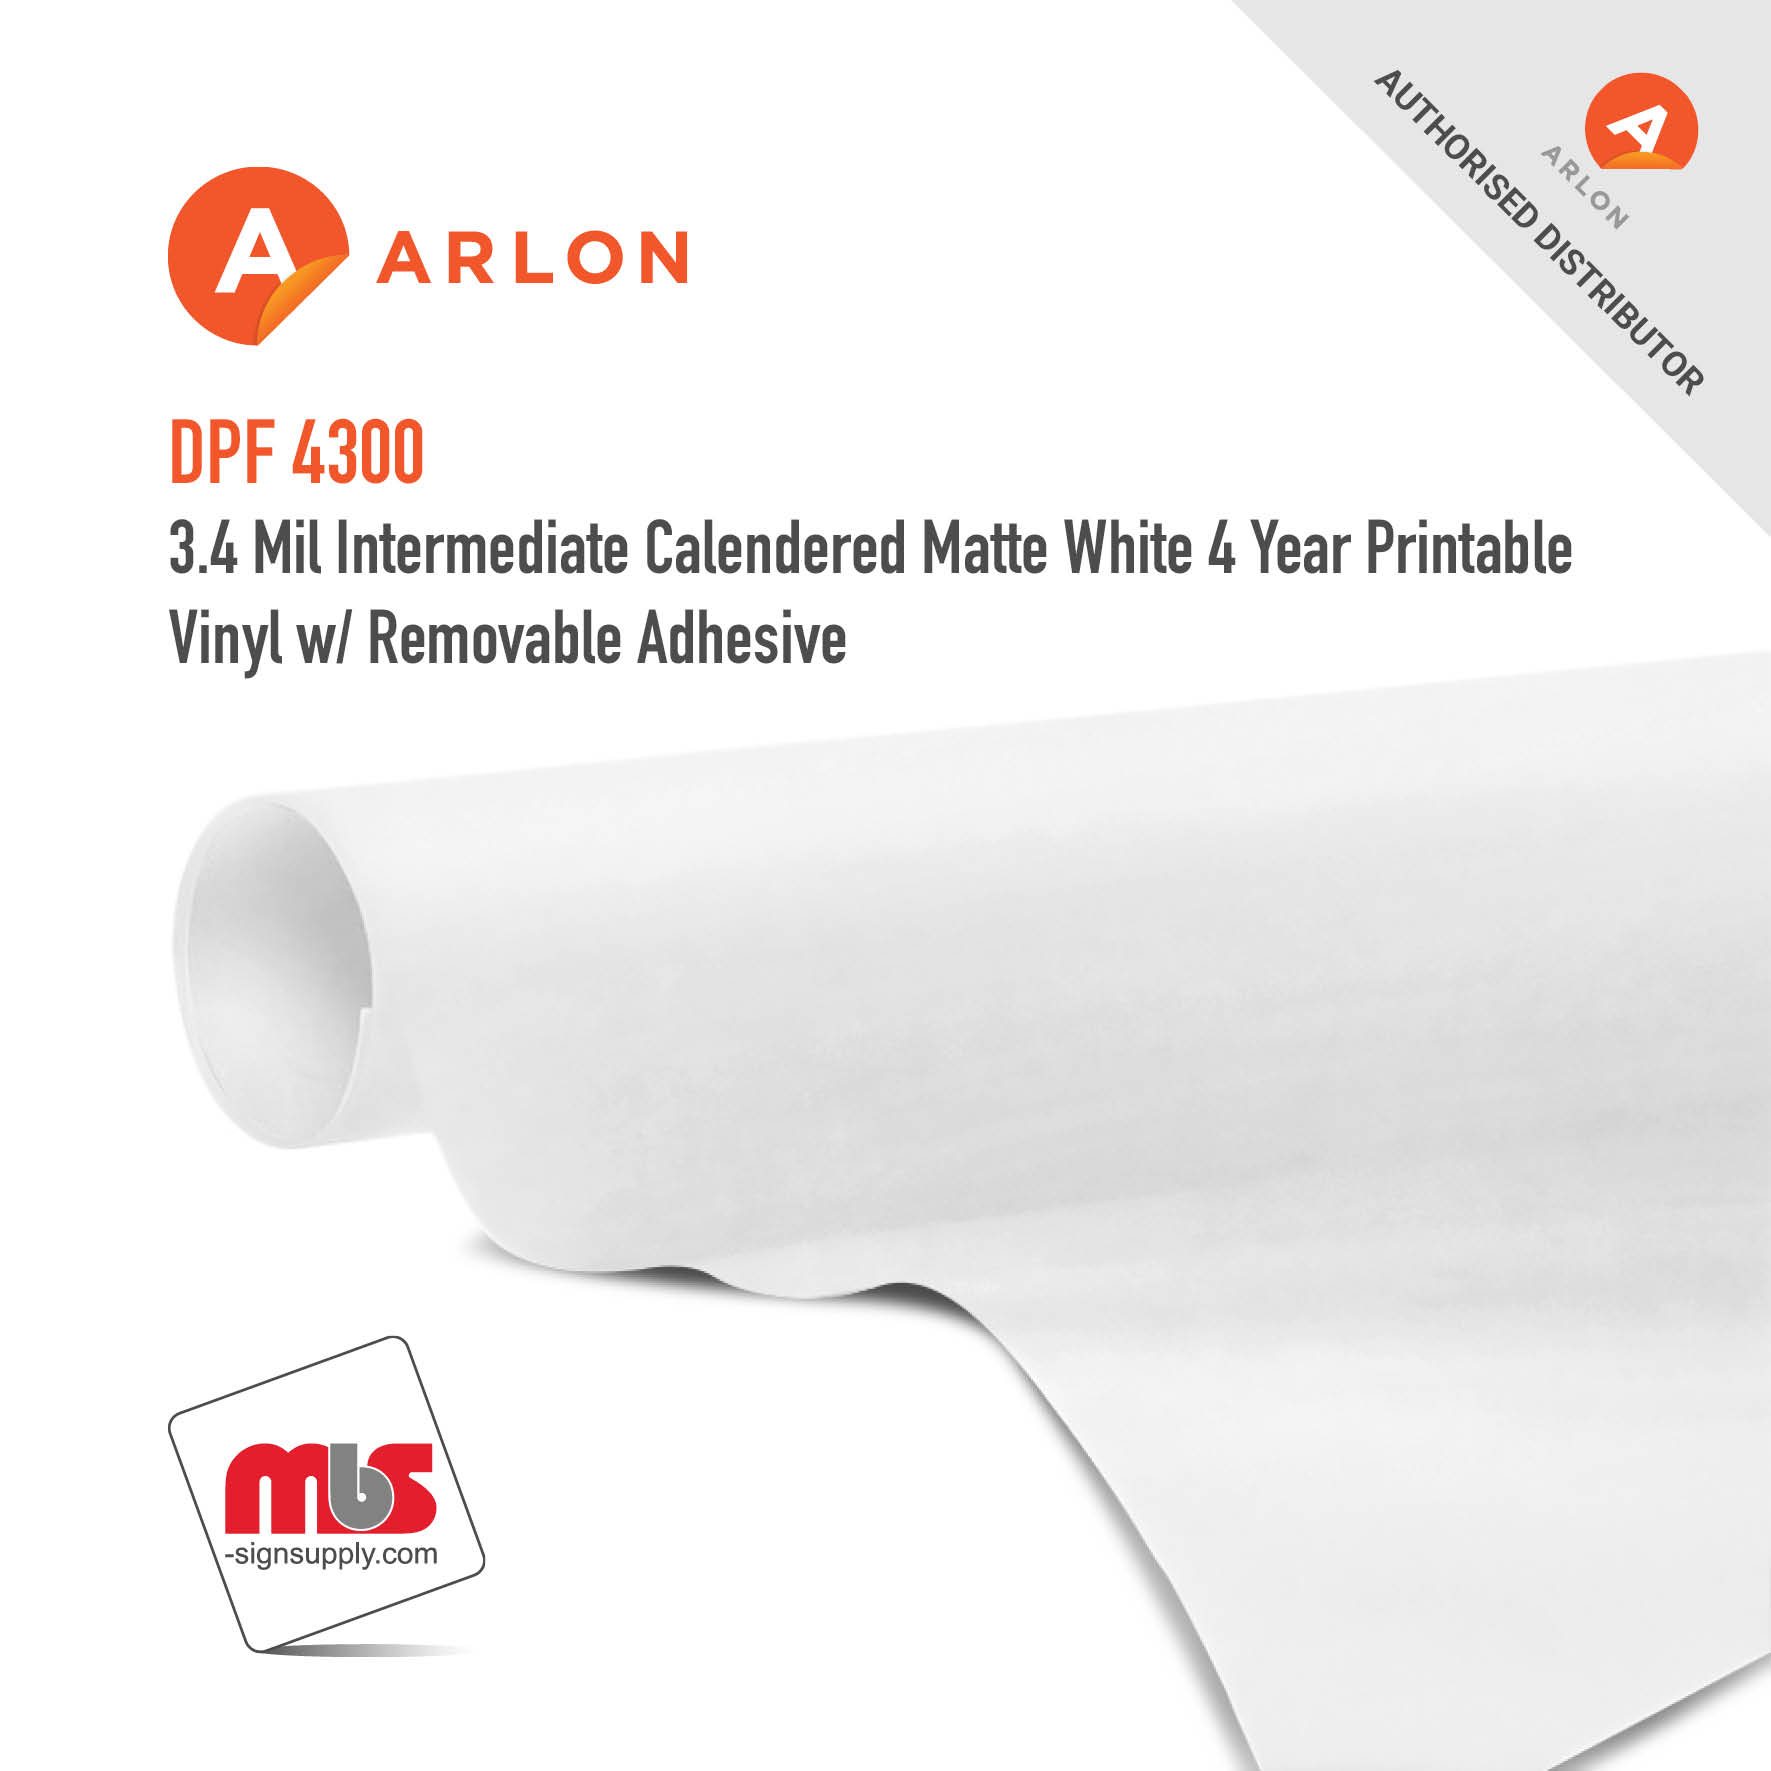 54'' x 50 Yard Roll - Arlon DPF 4300 3.4 Mil Intermediate Calendered Matte White 4 Year Printable Vinyl w/ Removable Adhesive